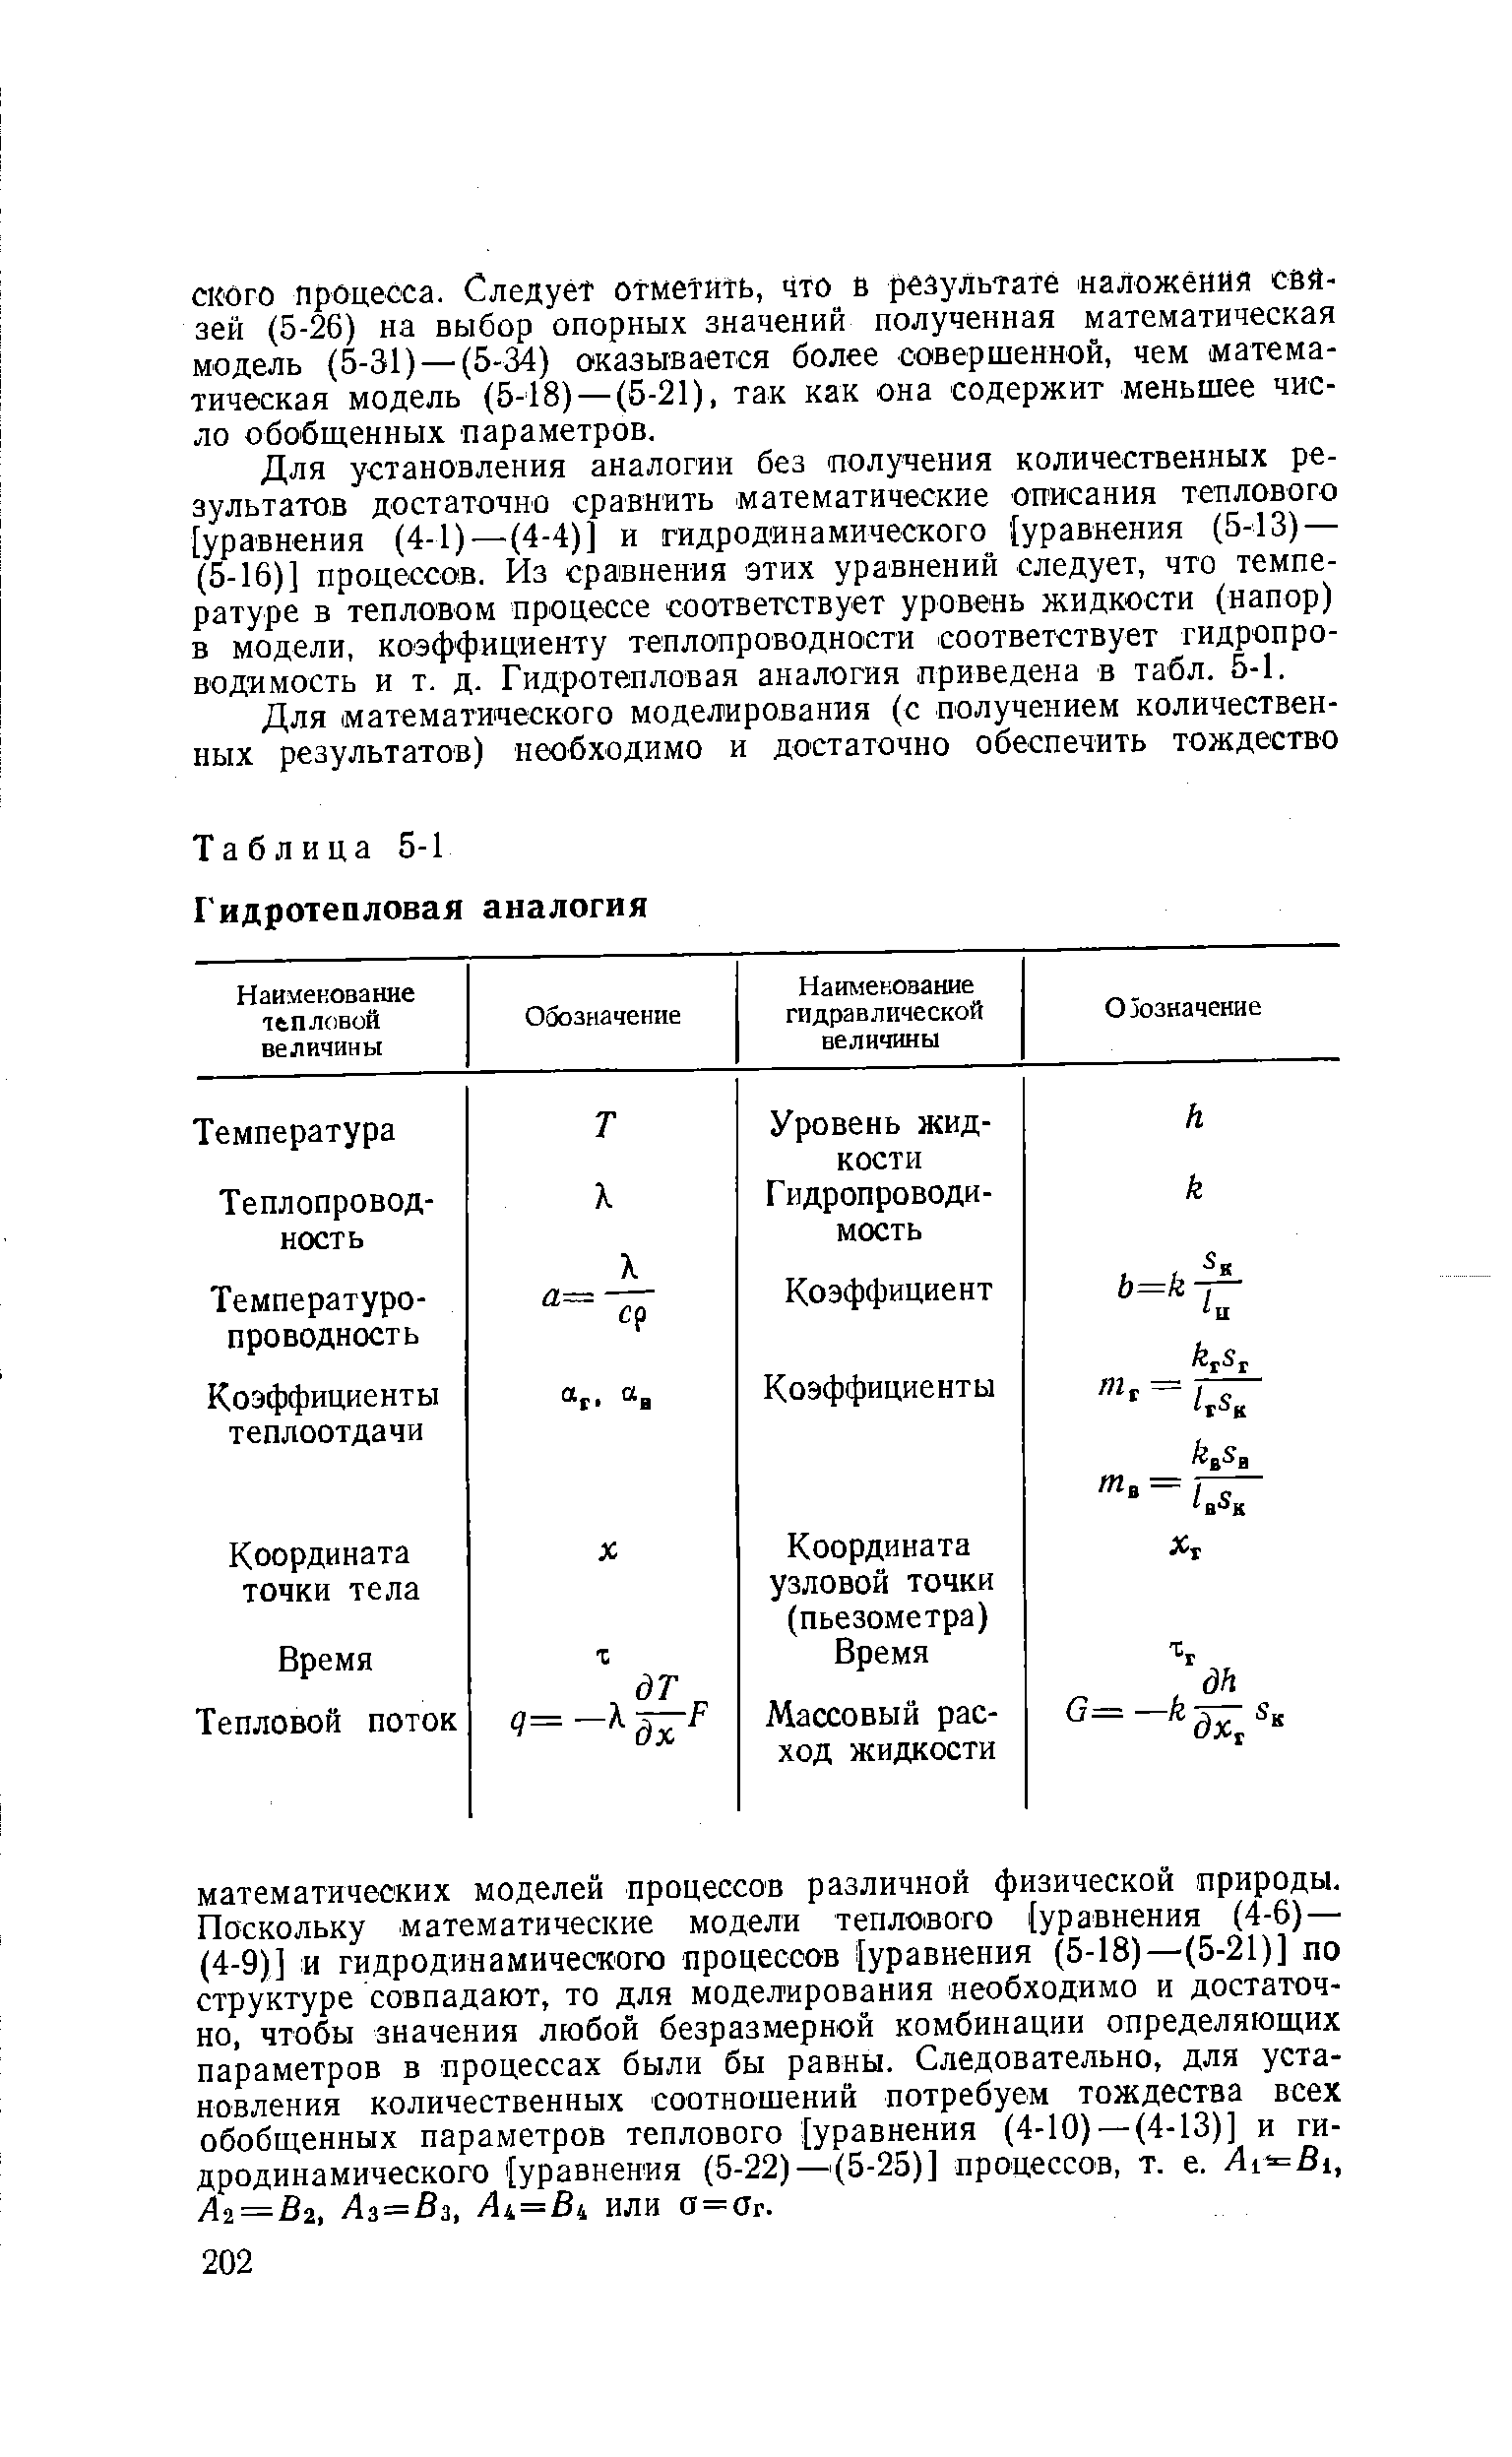 Таблица 5-1 Гидротепловая аналогия
